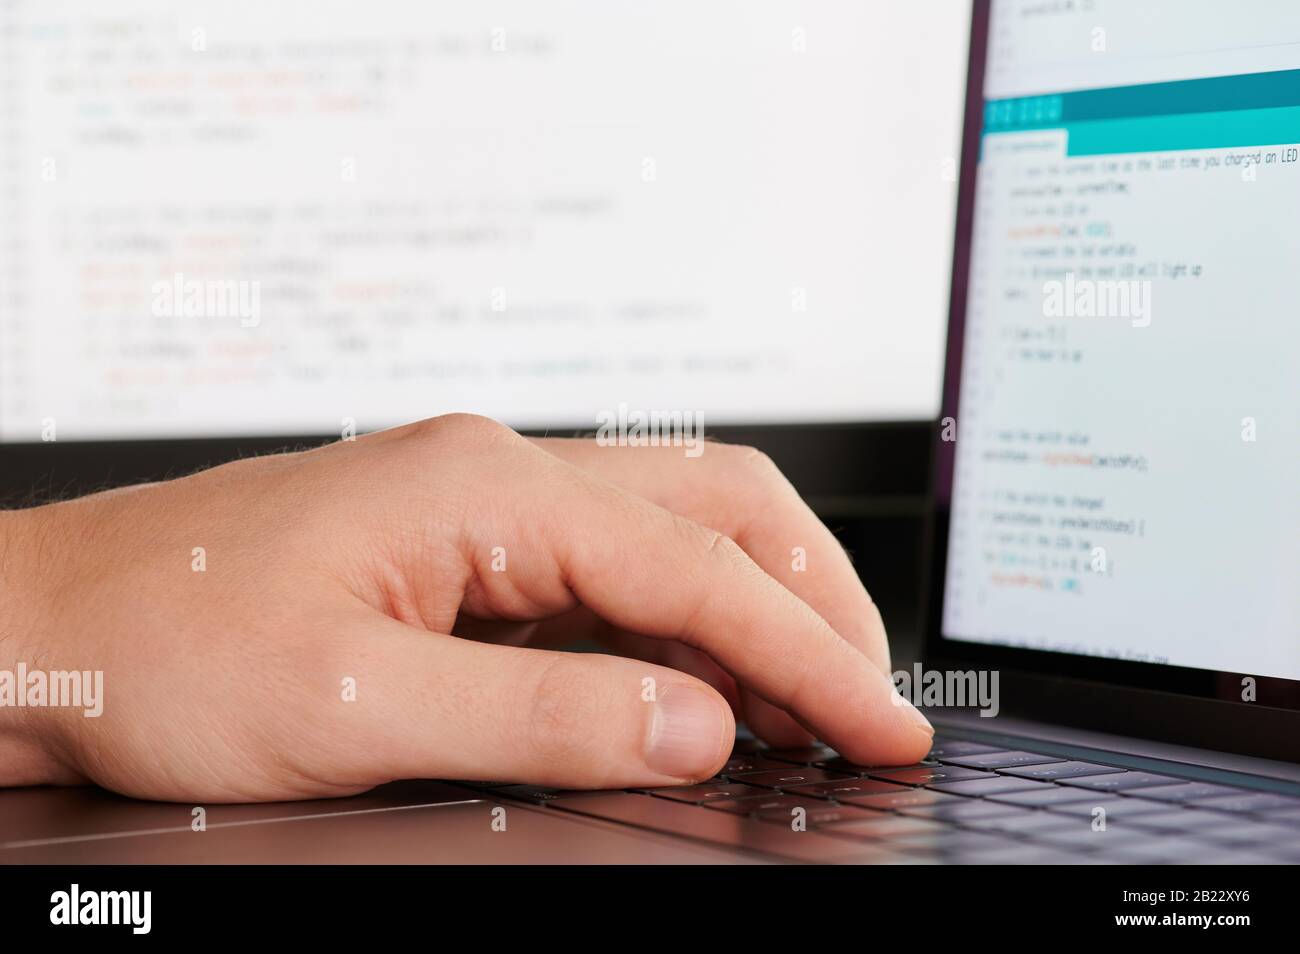 One hand on keyboard in programm script blurred background Stock Photo